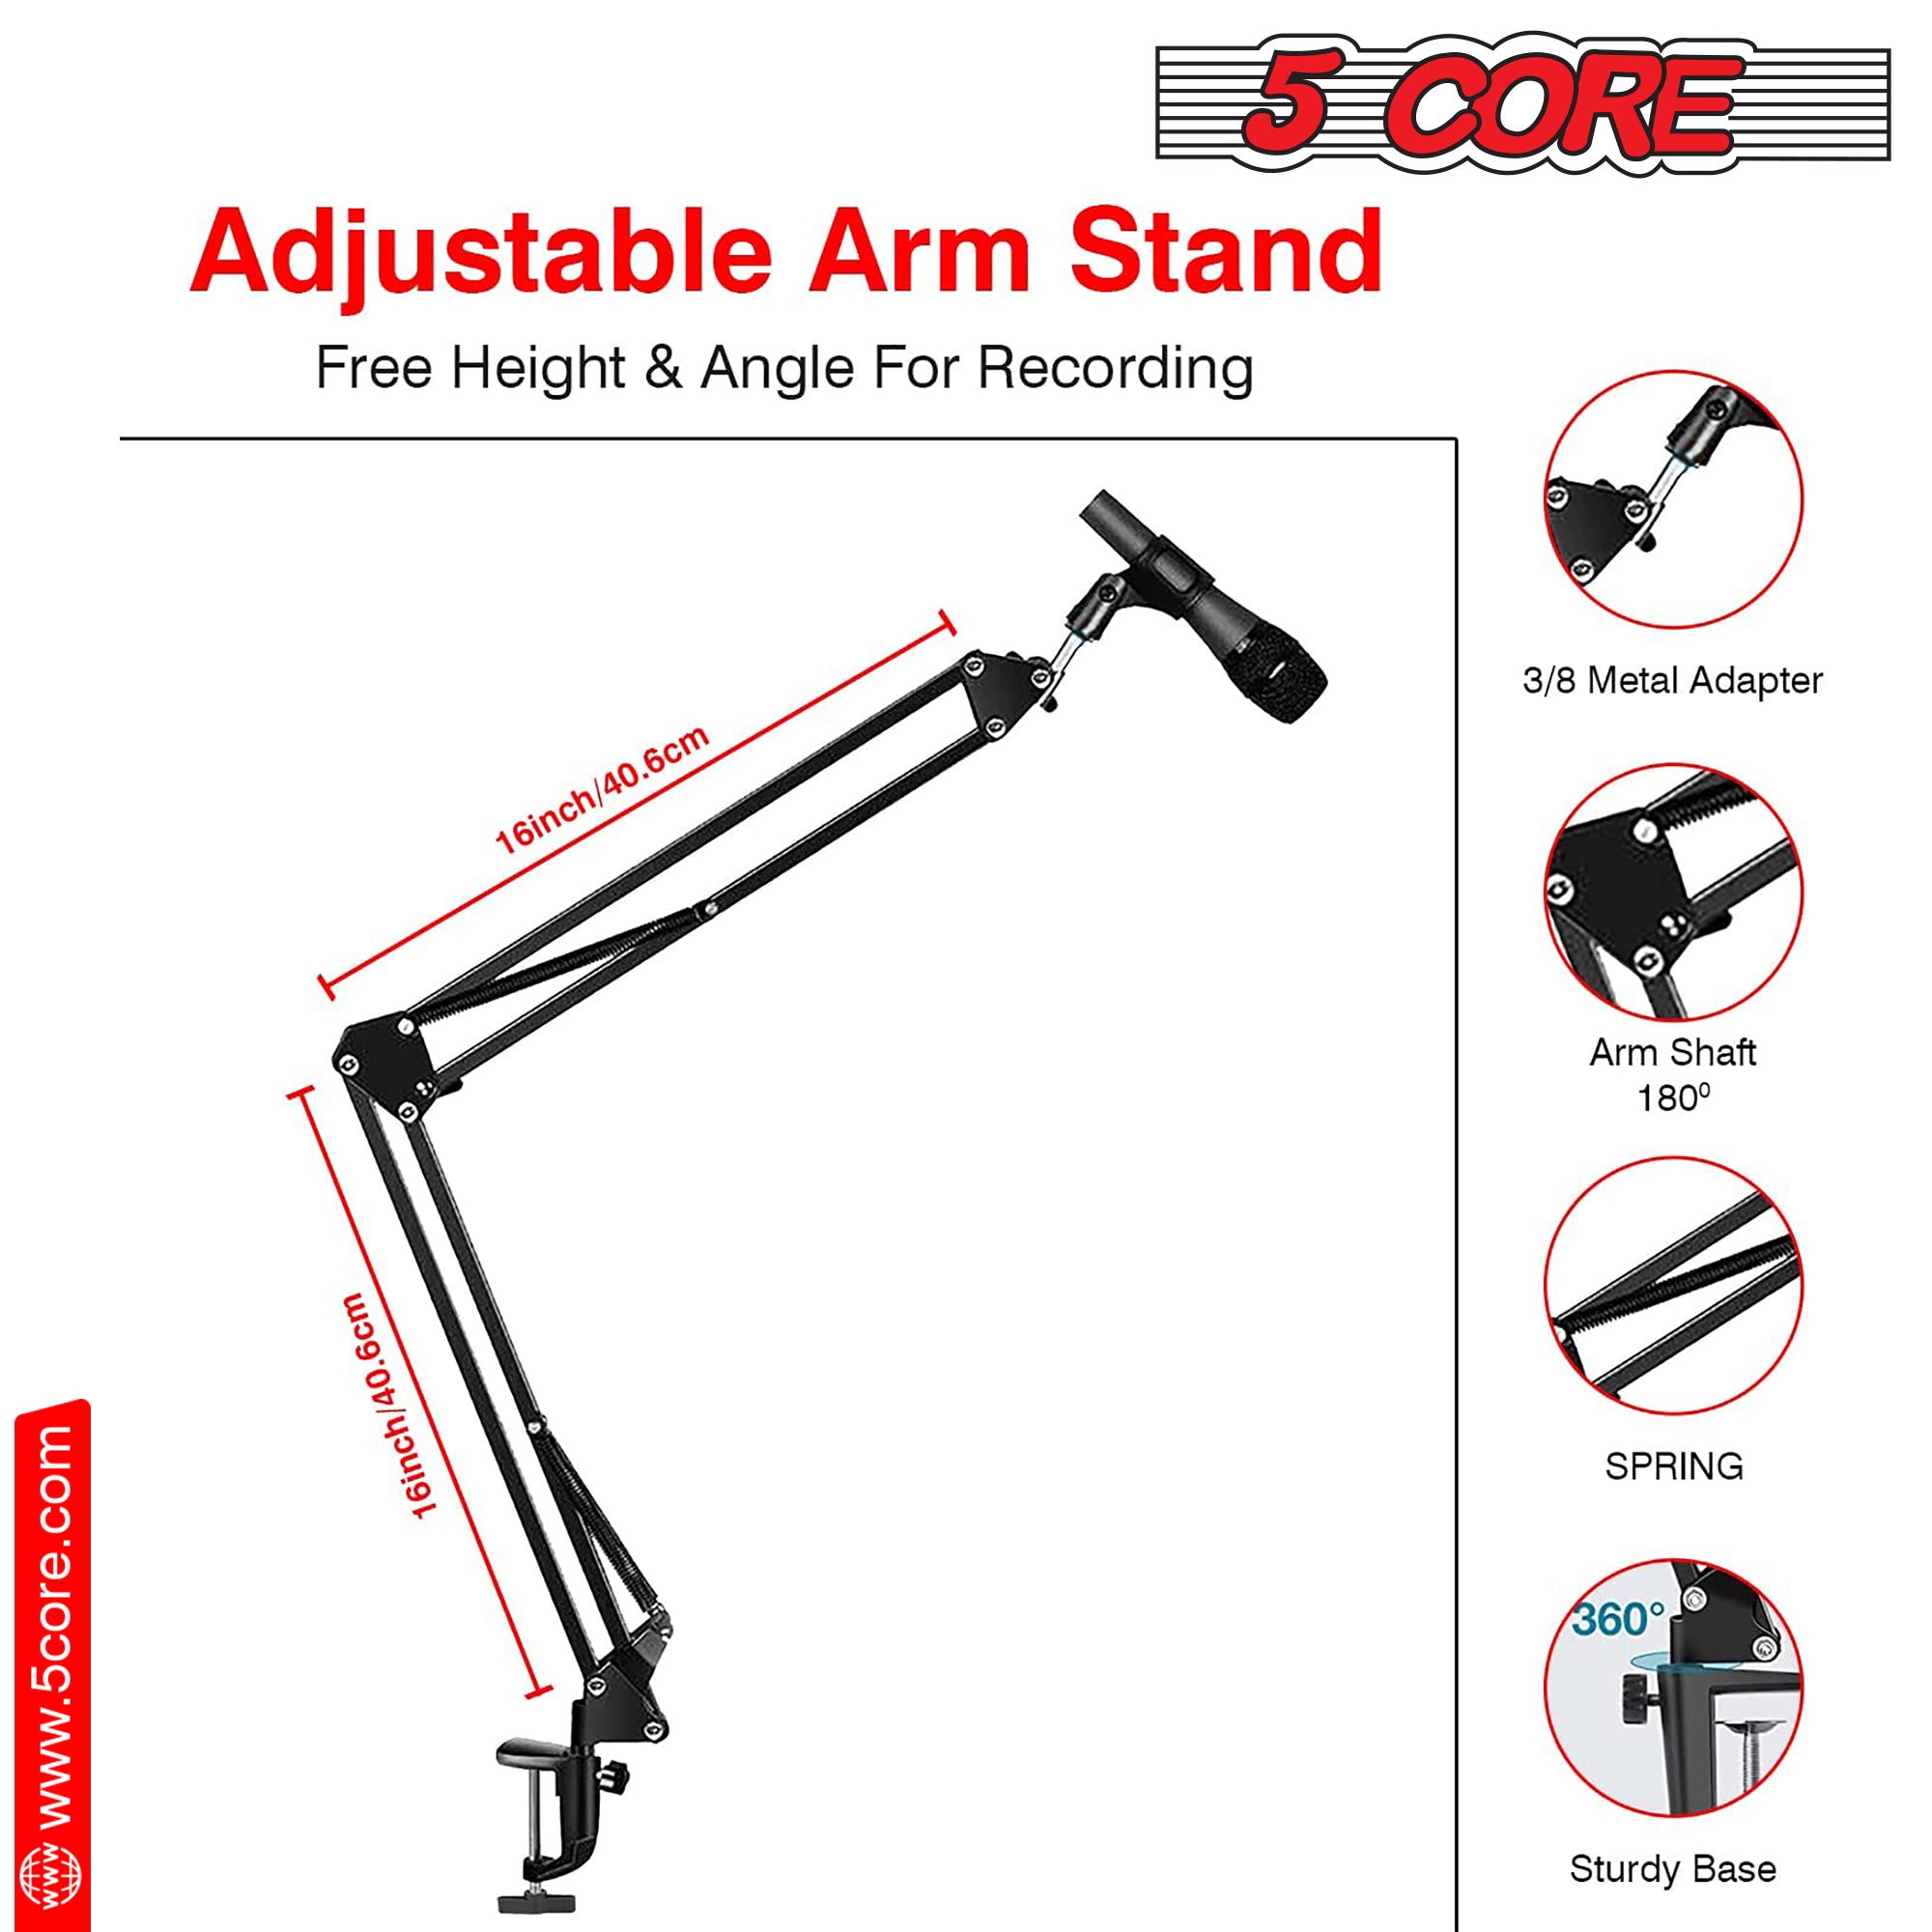 Adjustable arm stand